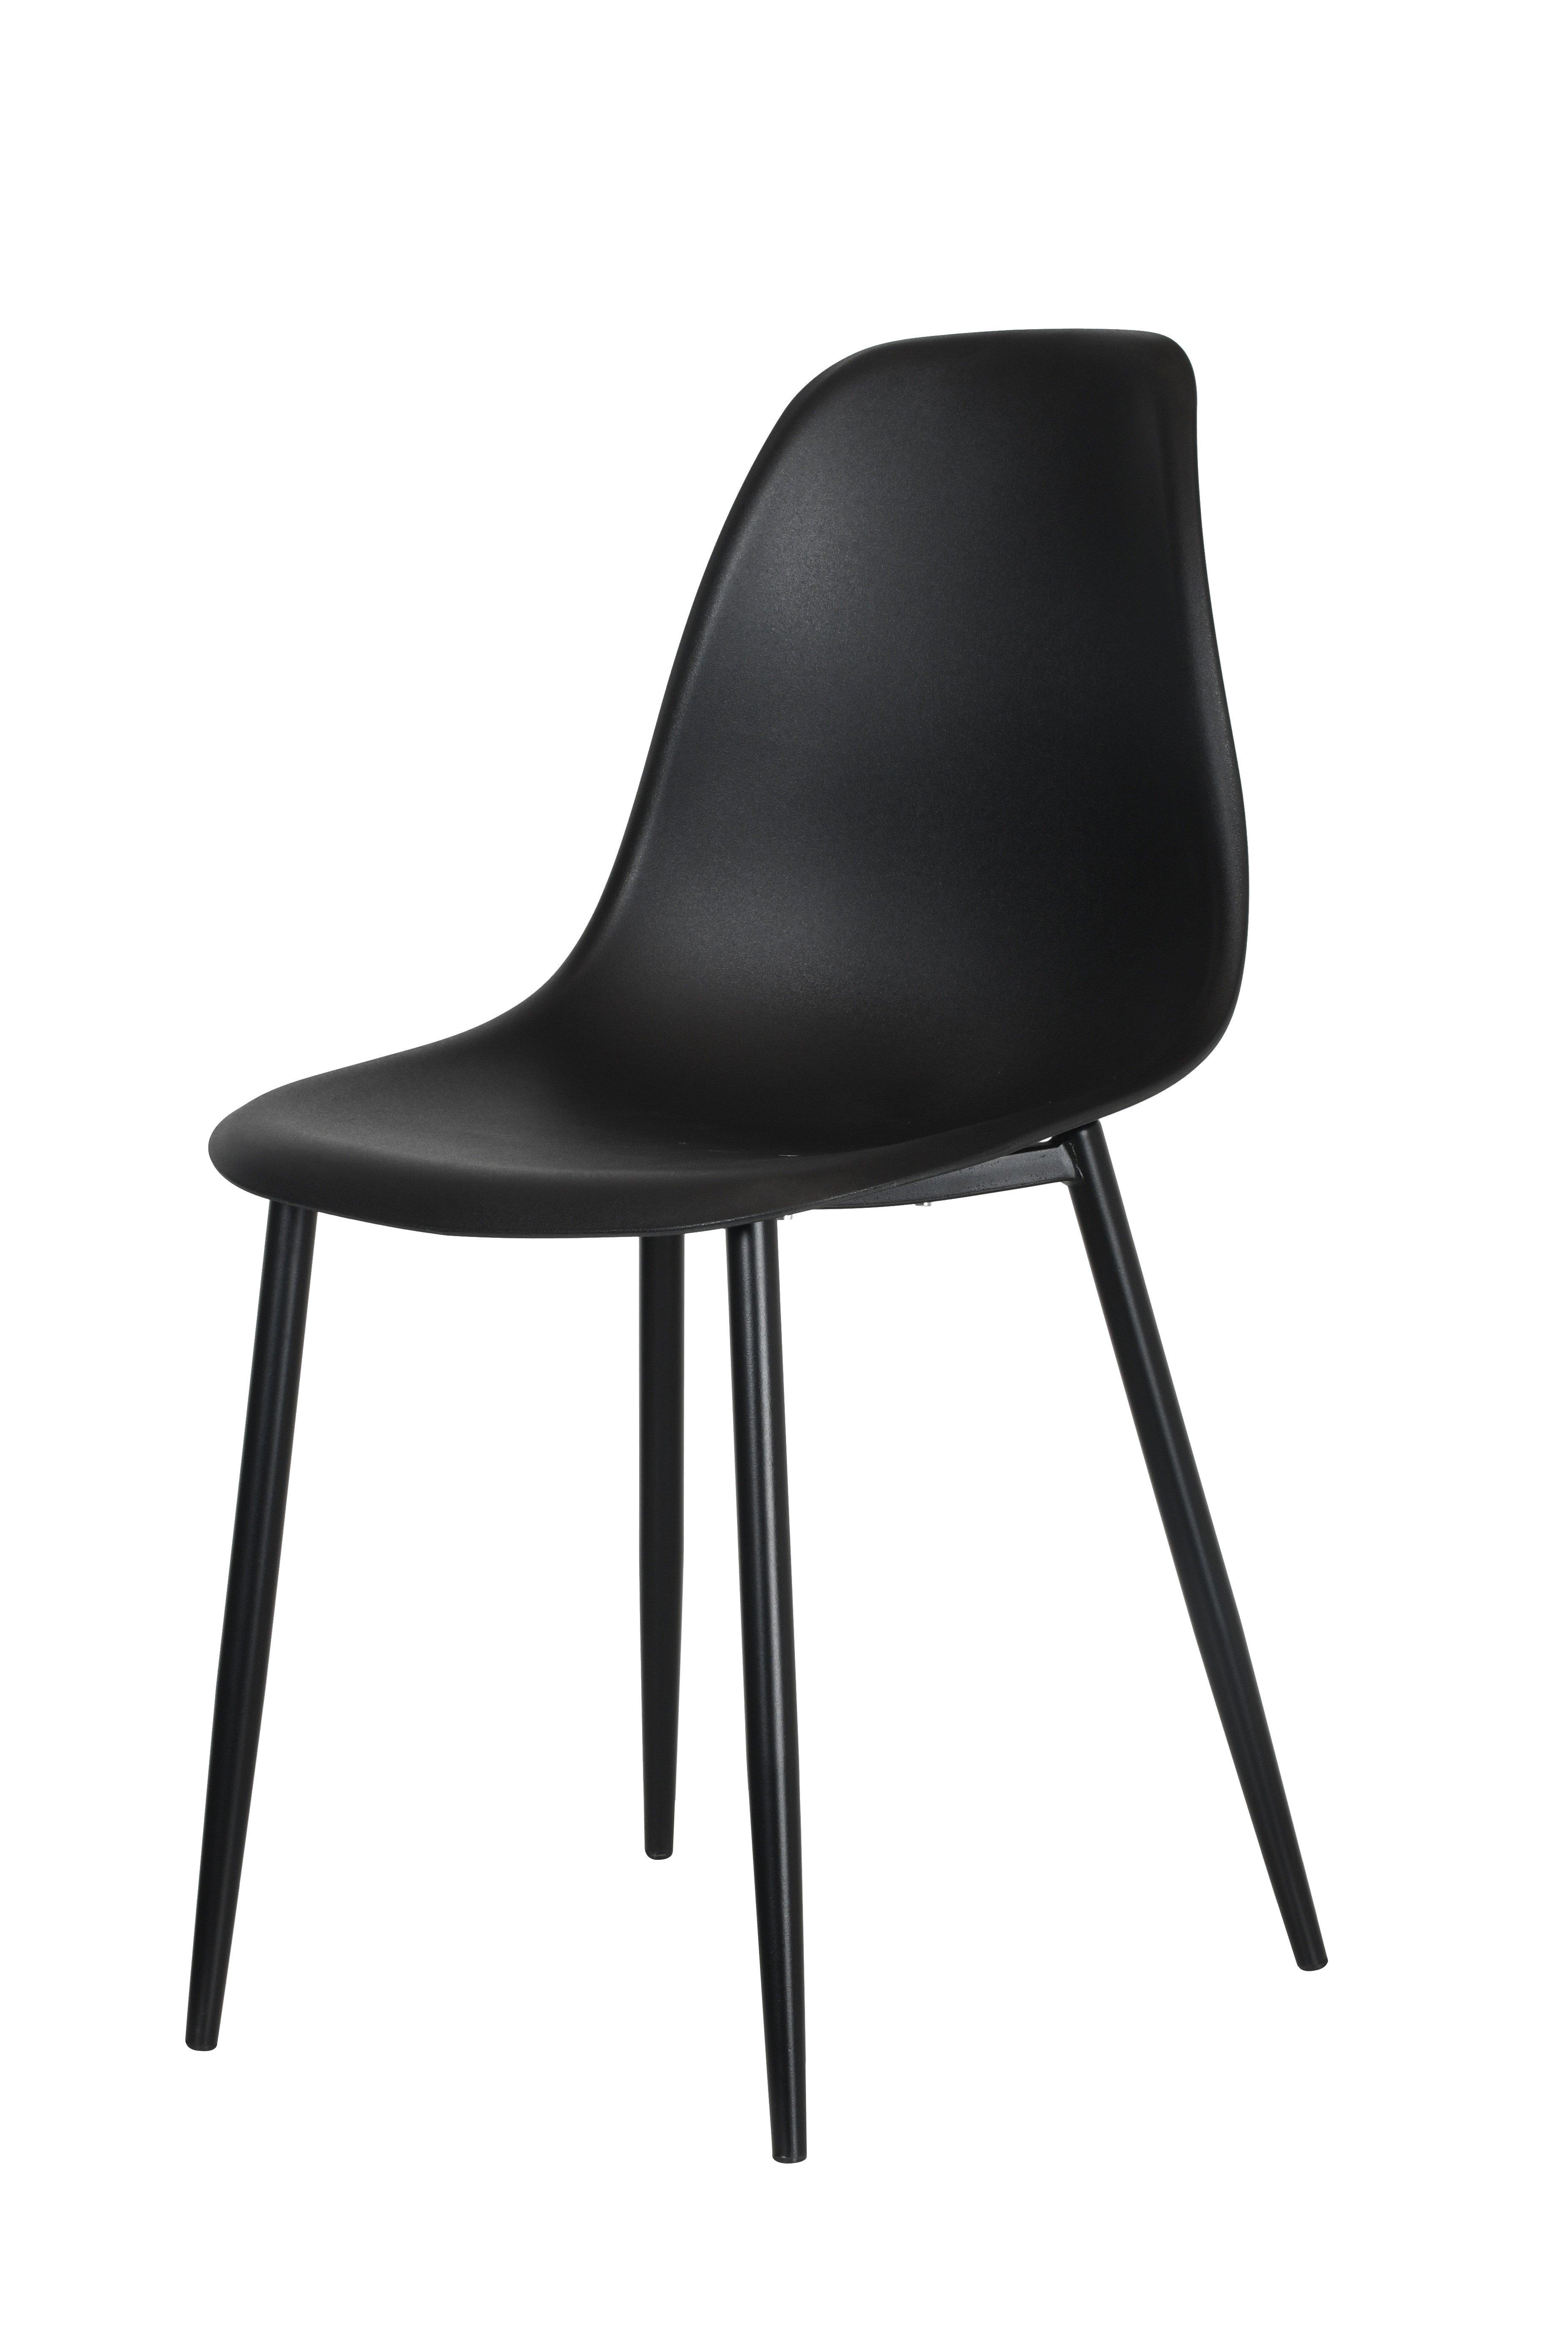 Aspen Curve Chair, Light Grey Plastic Seat With Black Metal Legs (Pair)